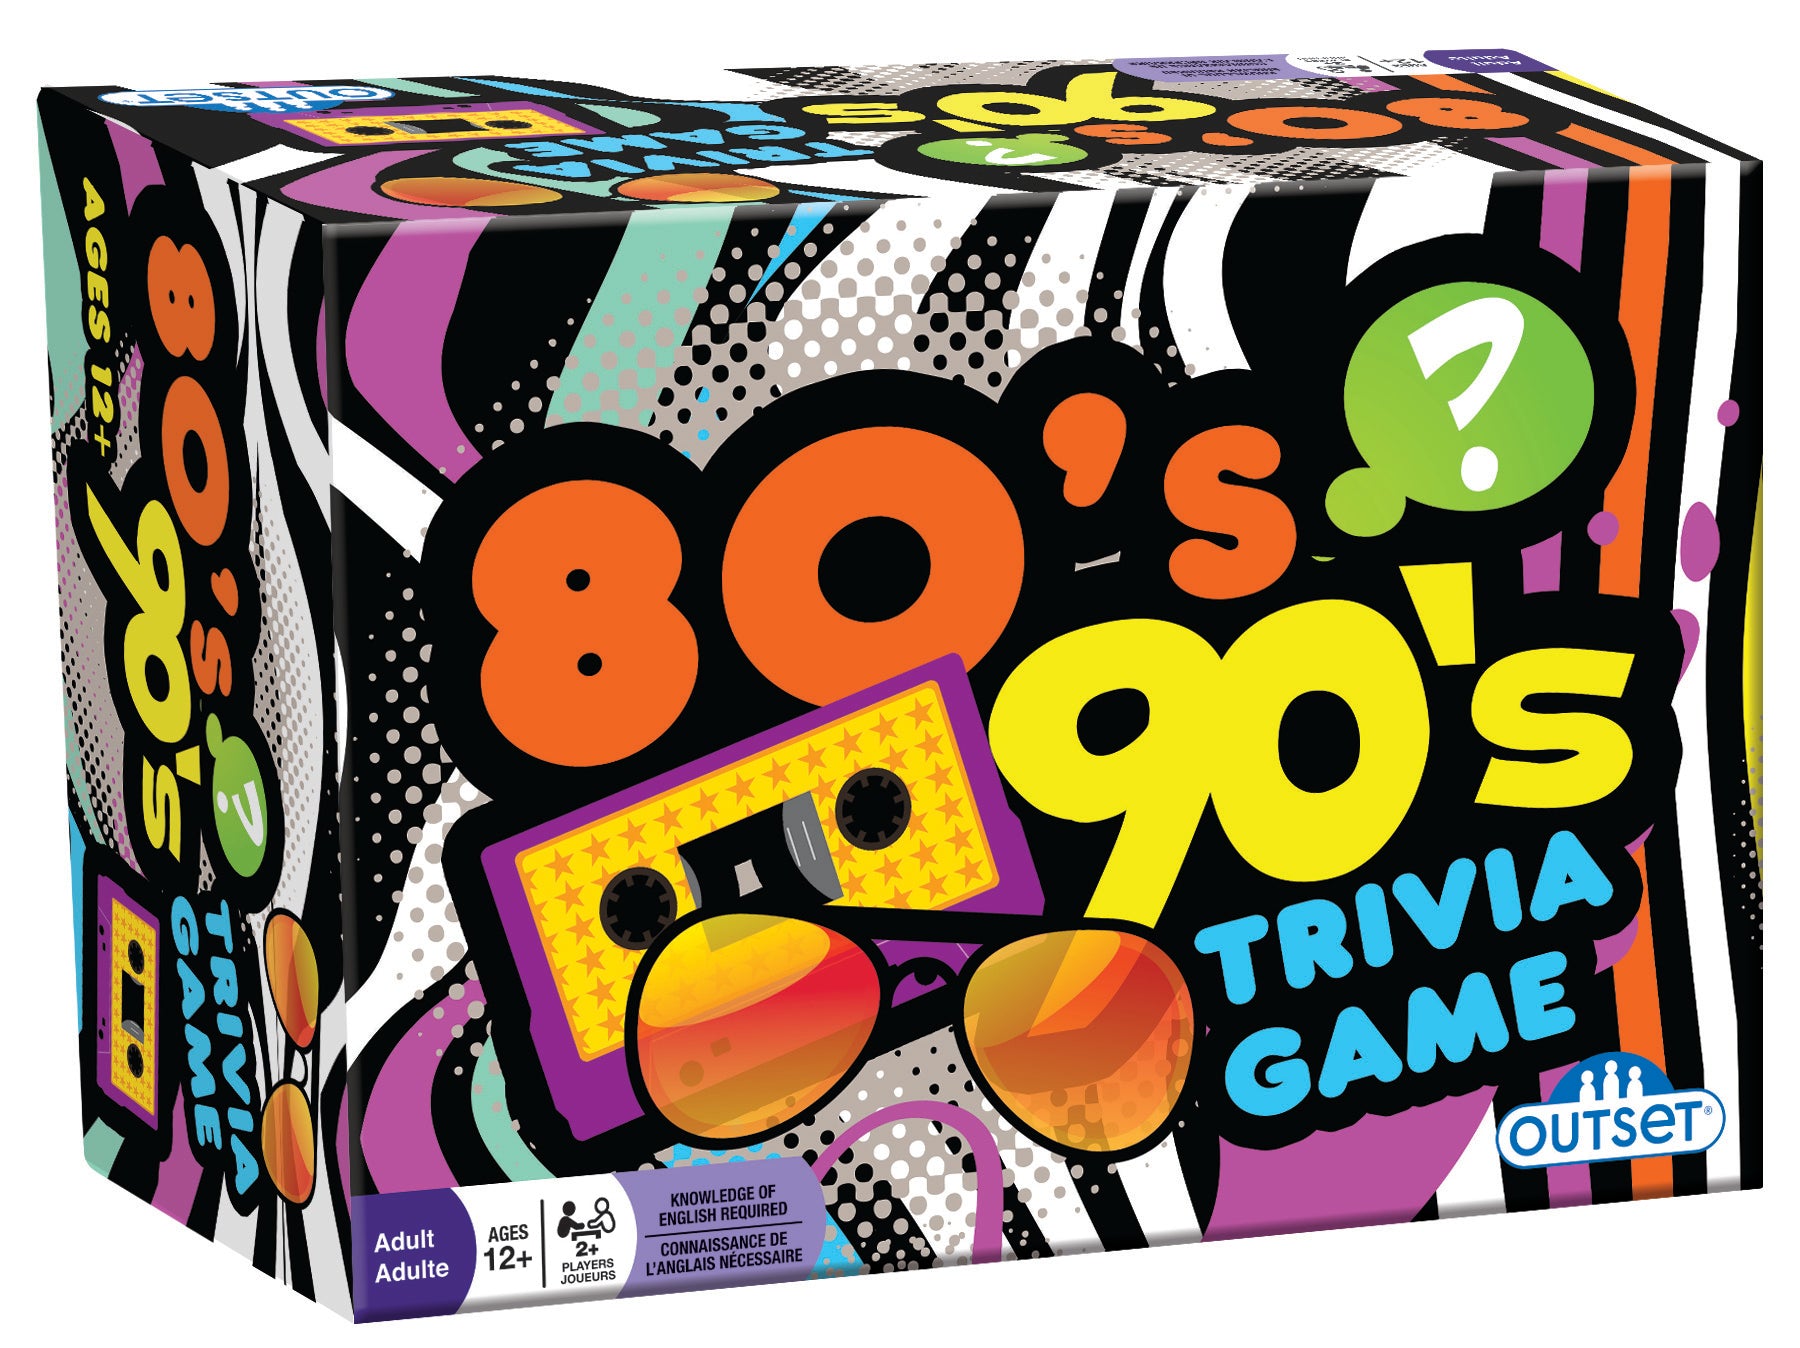 80 90s Trivia Game